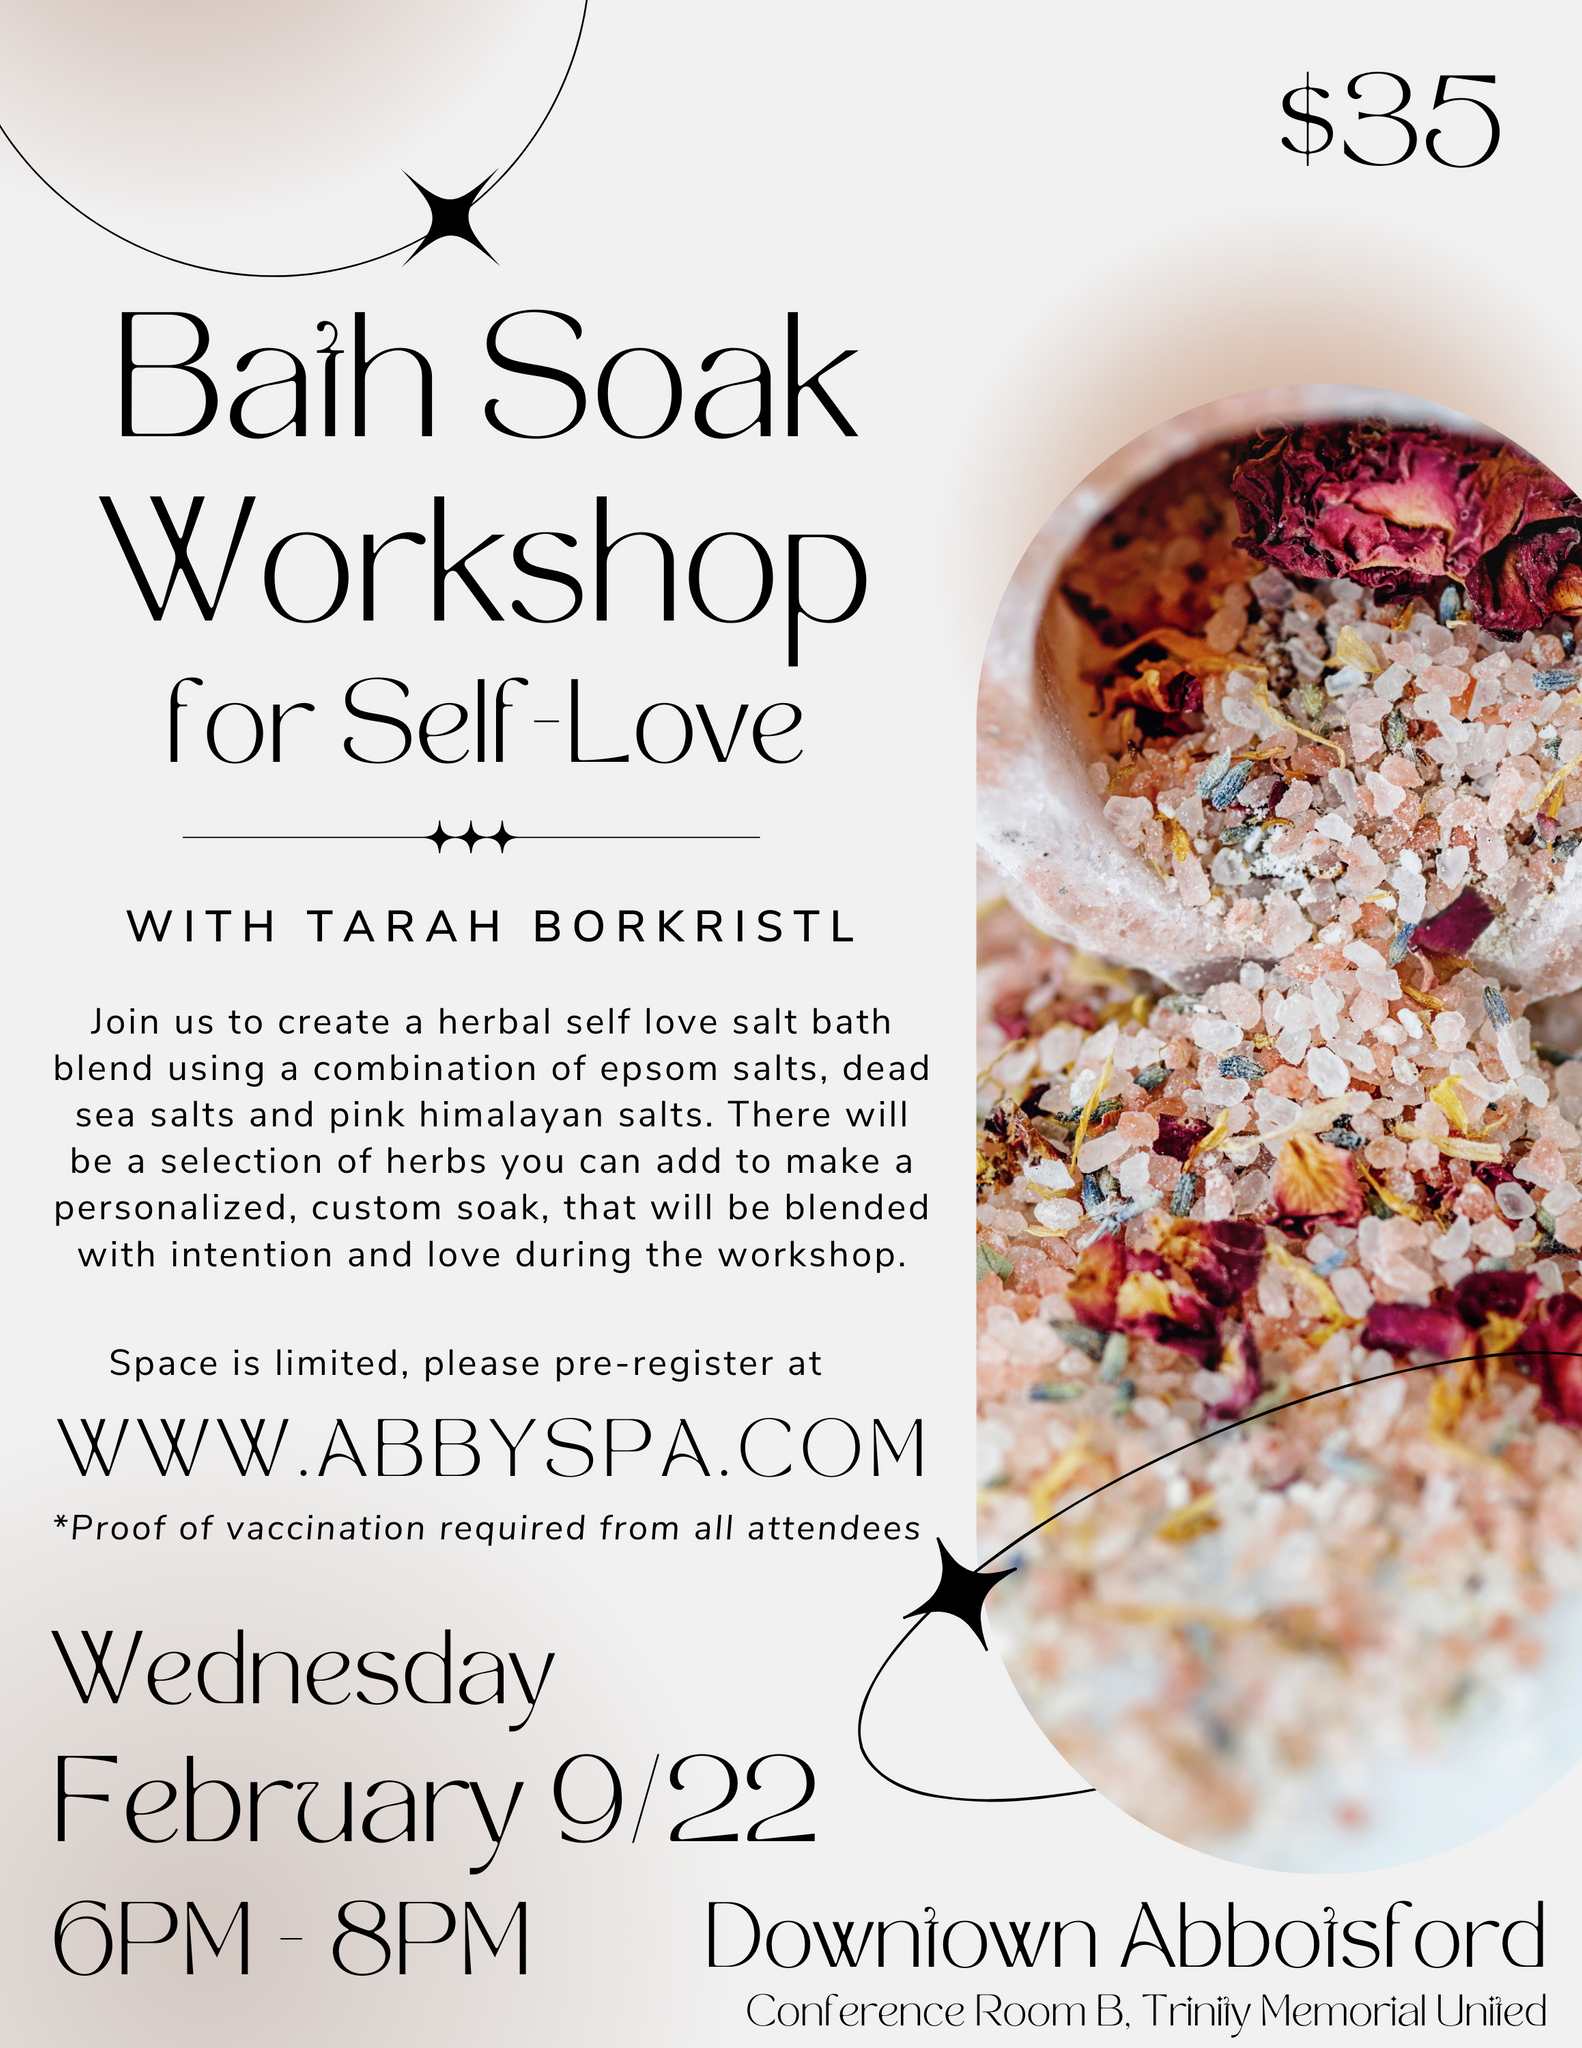 Bath Soak Workshop for Self Love